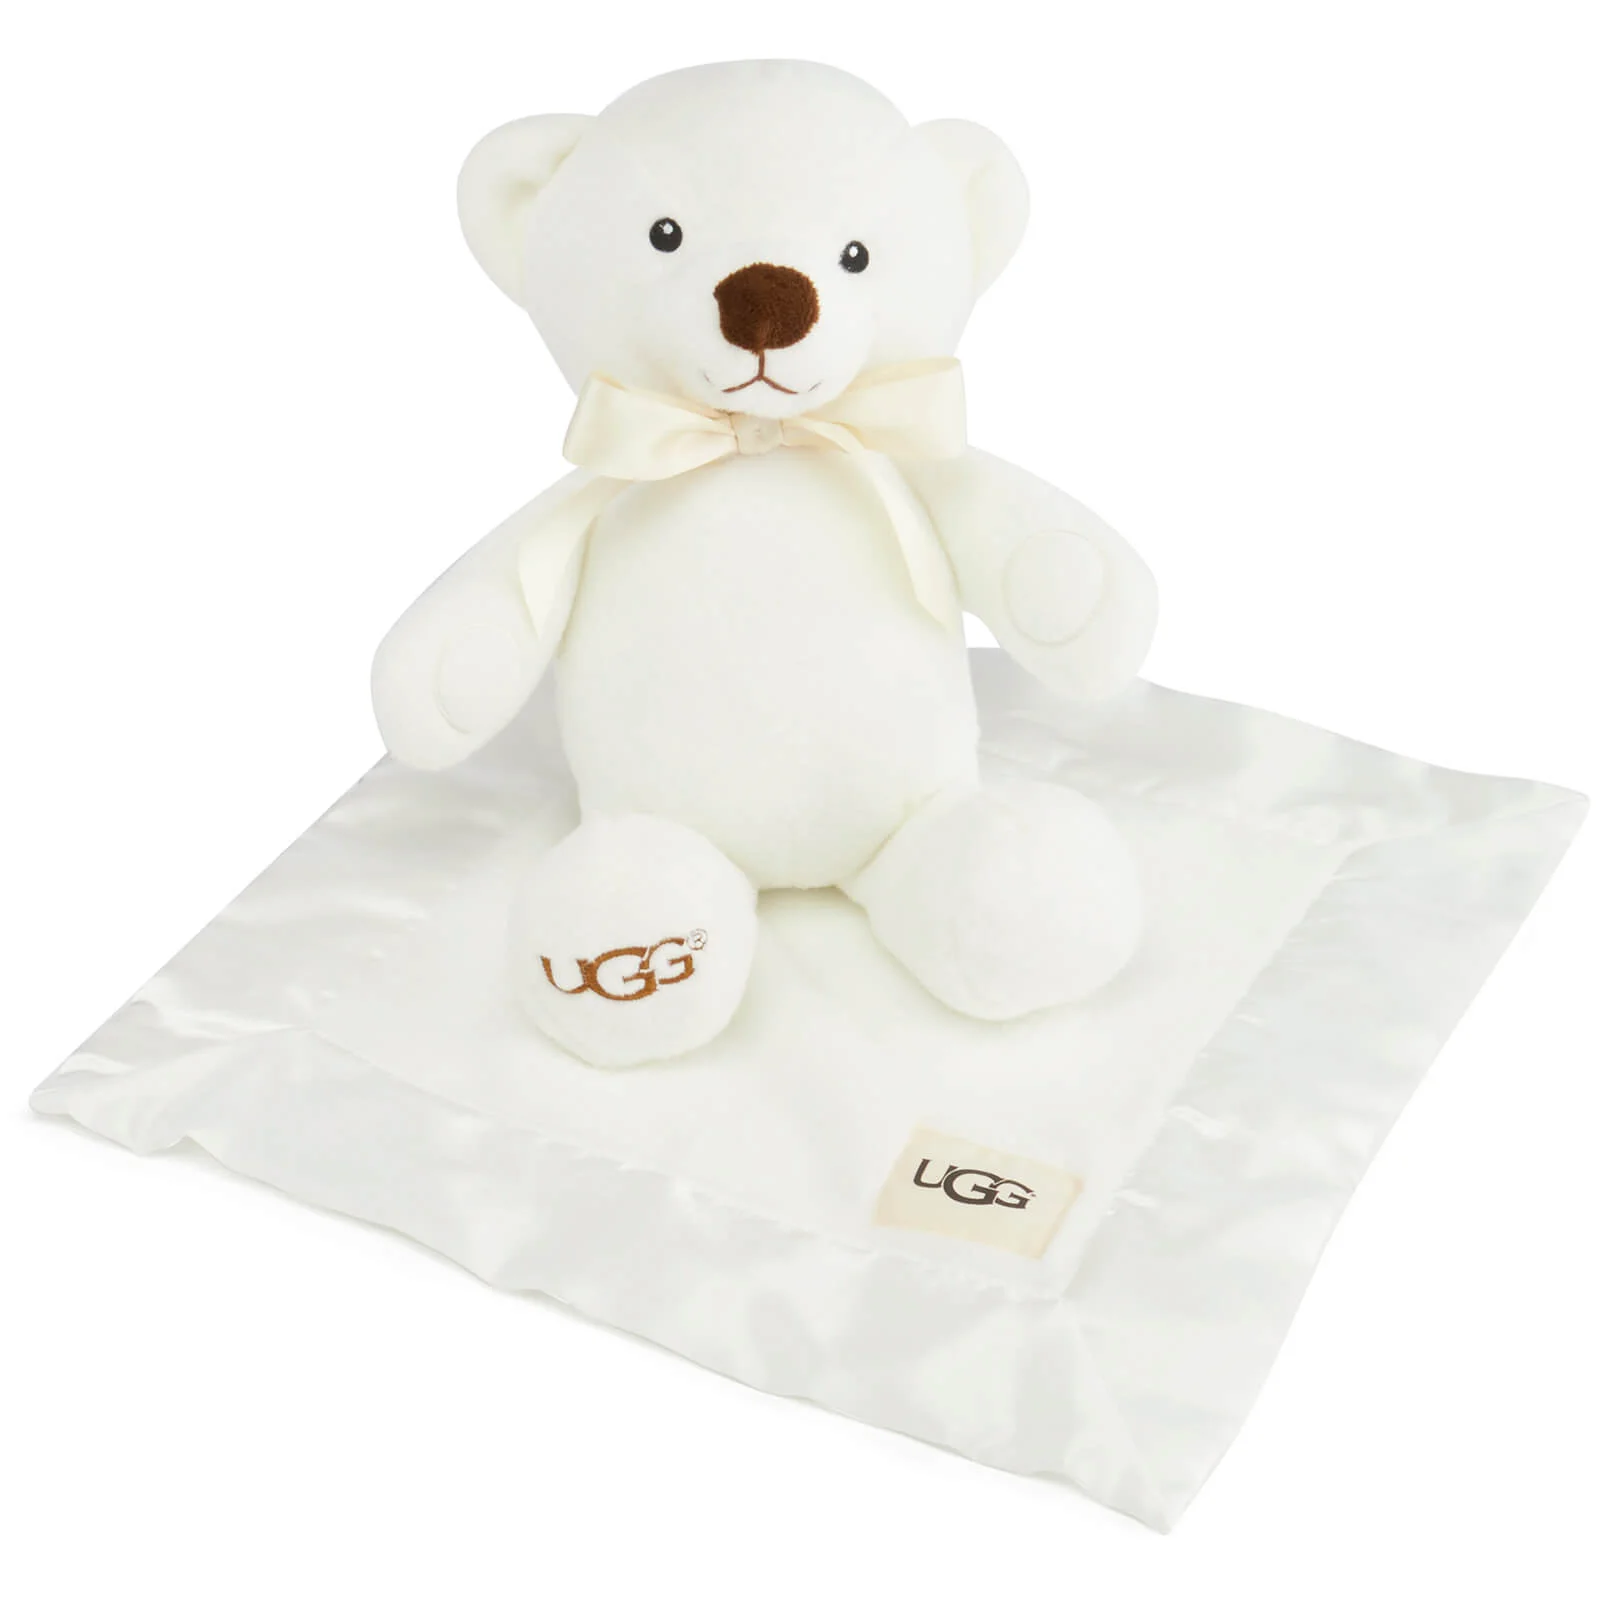 UGG Babies' Snuggle Gift Set - Cream Image 1